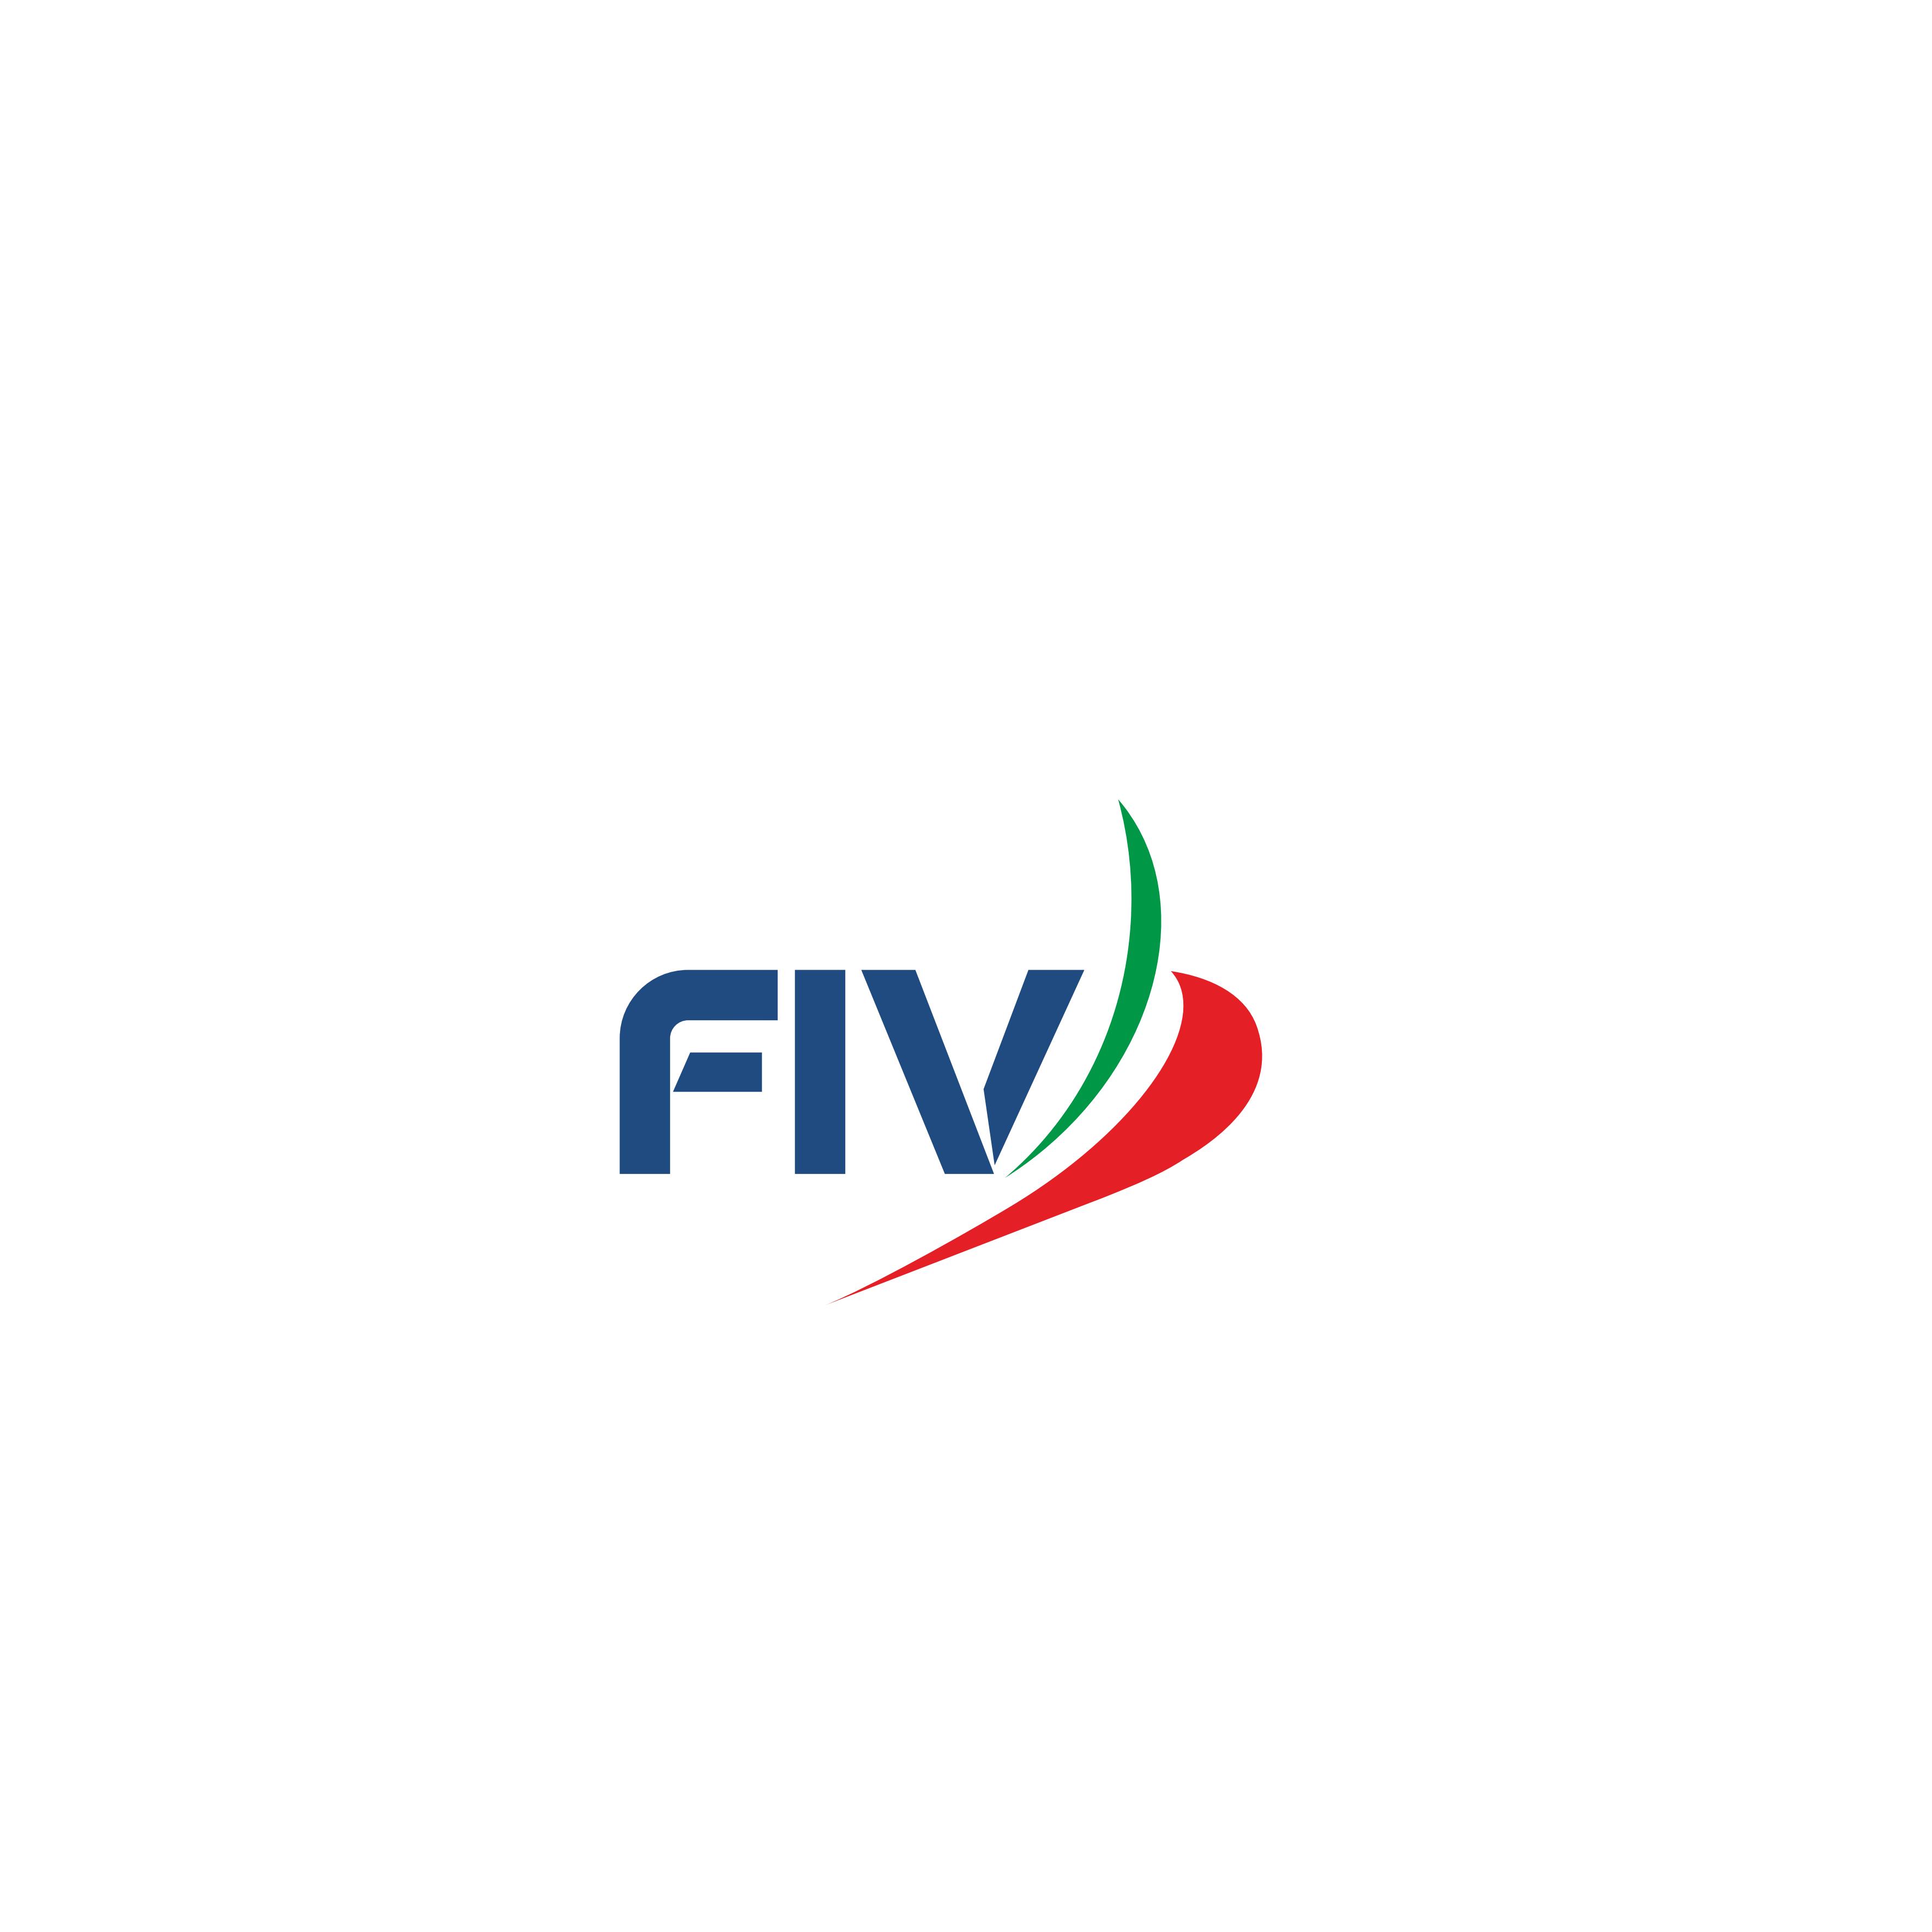 images/fiv/logo_9.jpg